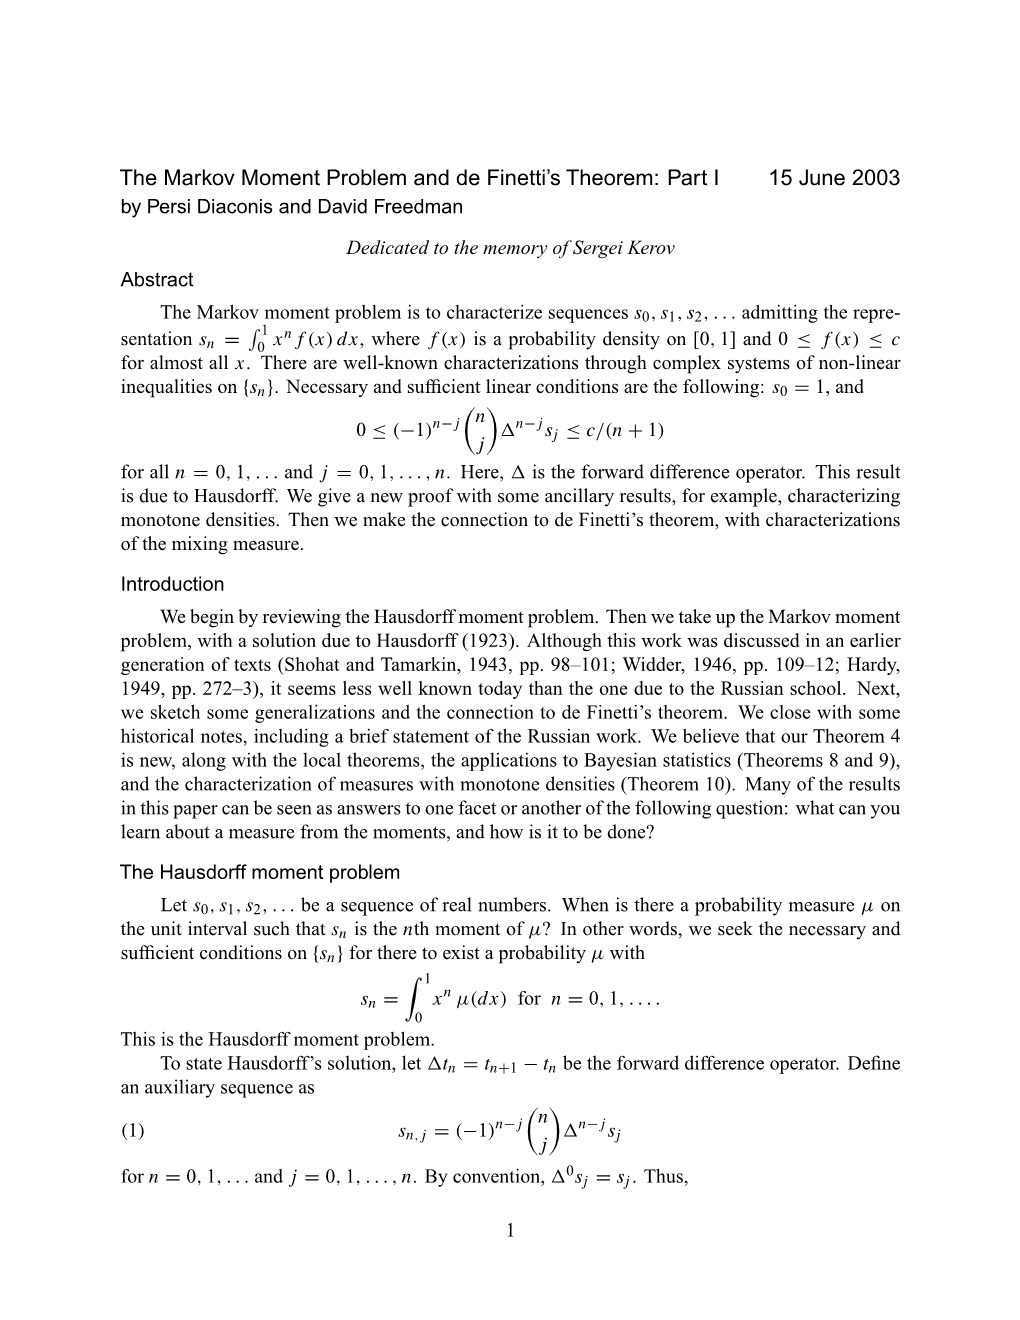 The Markov Moment Problem and De Finetti's Theorem: Part I 15 June 2003